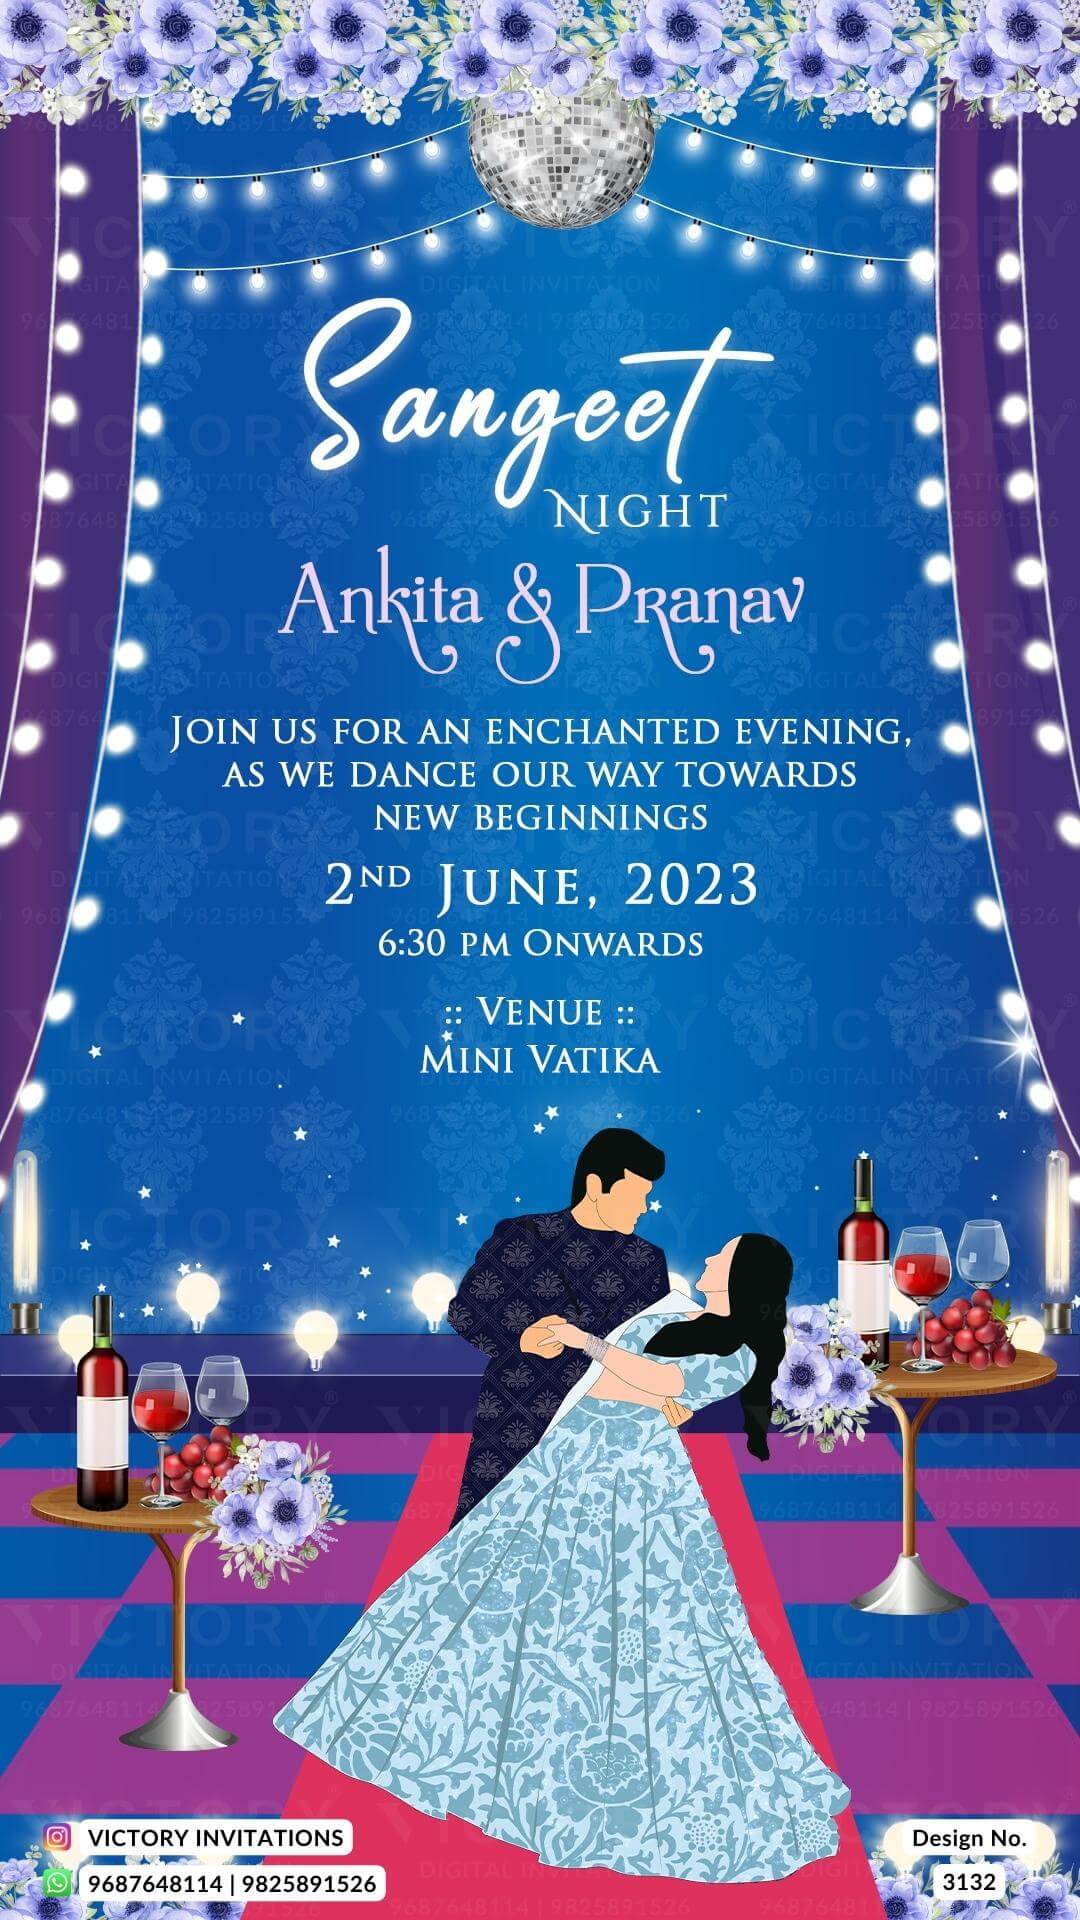 Sangeet Ceremony digital invitation card design no.3132